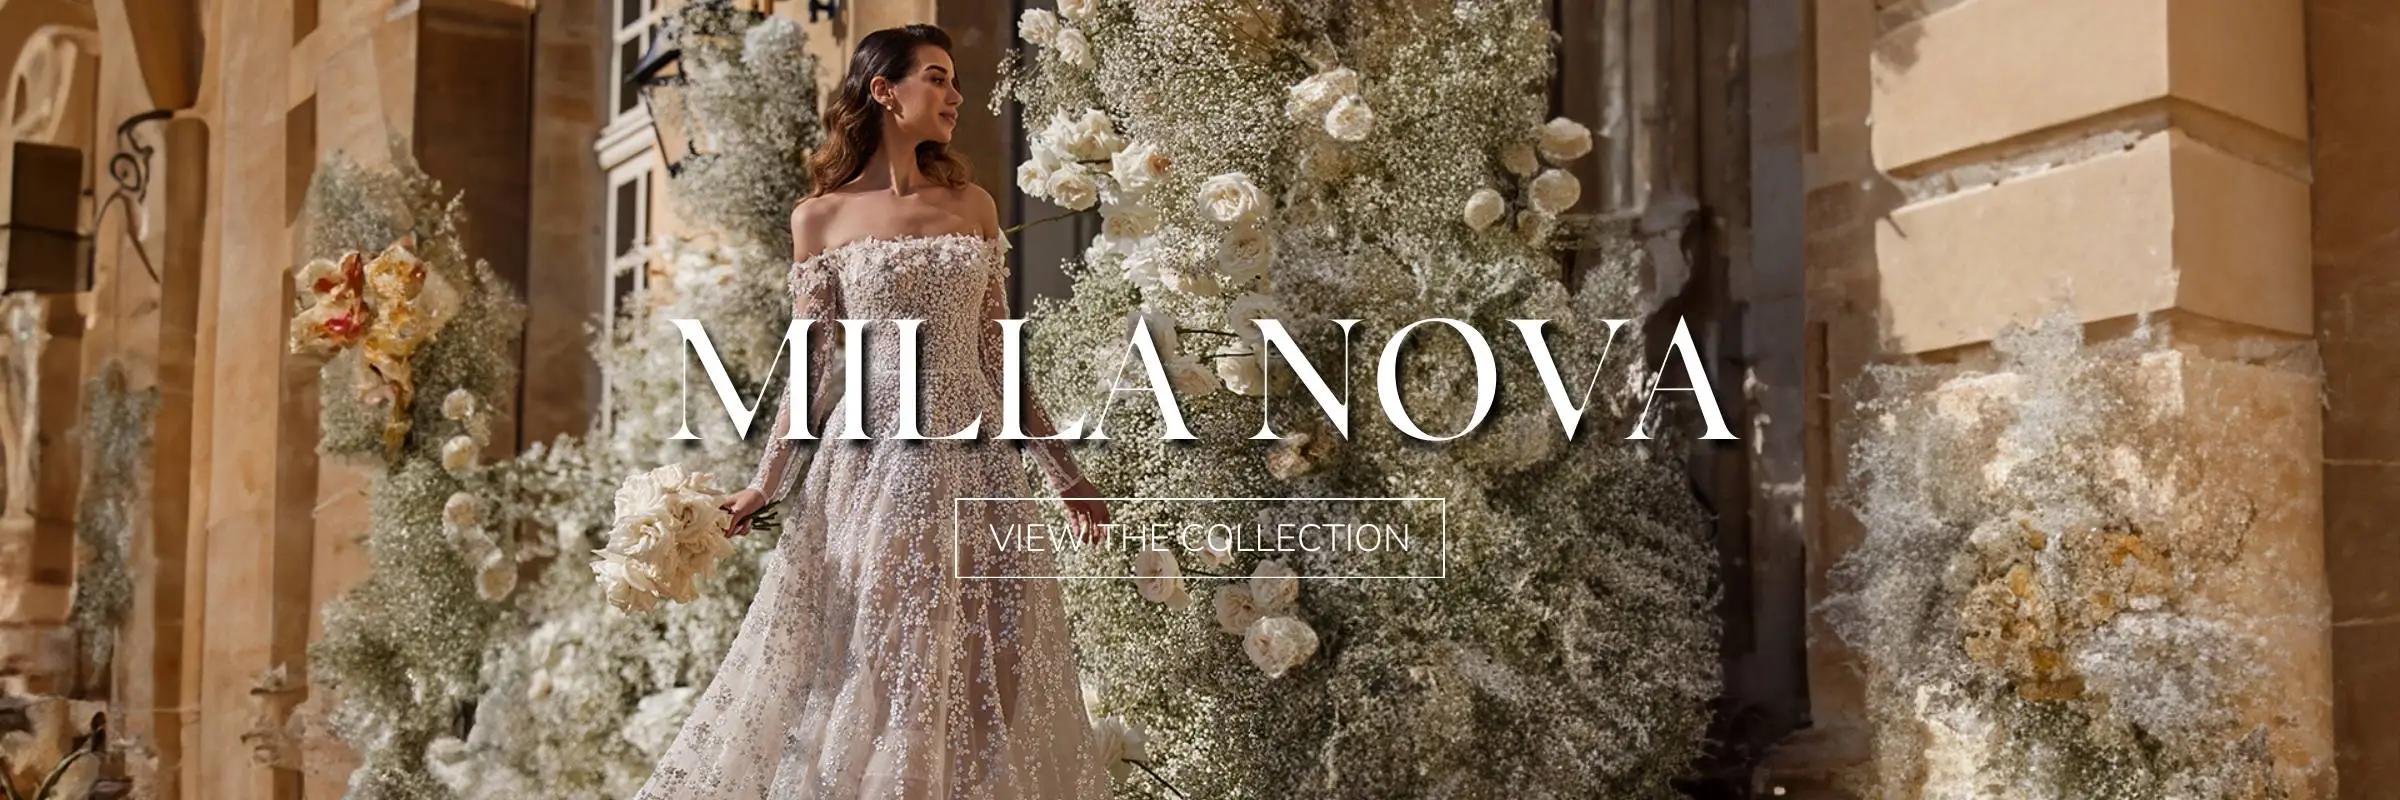 Milla Nova gown